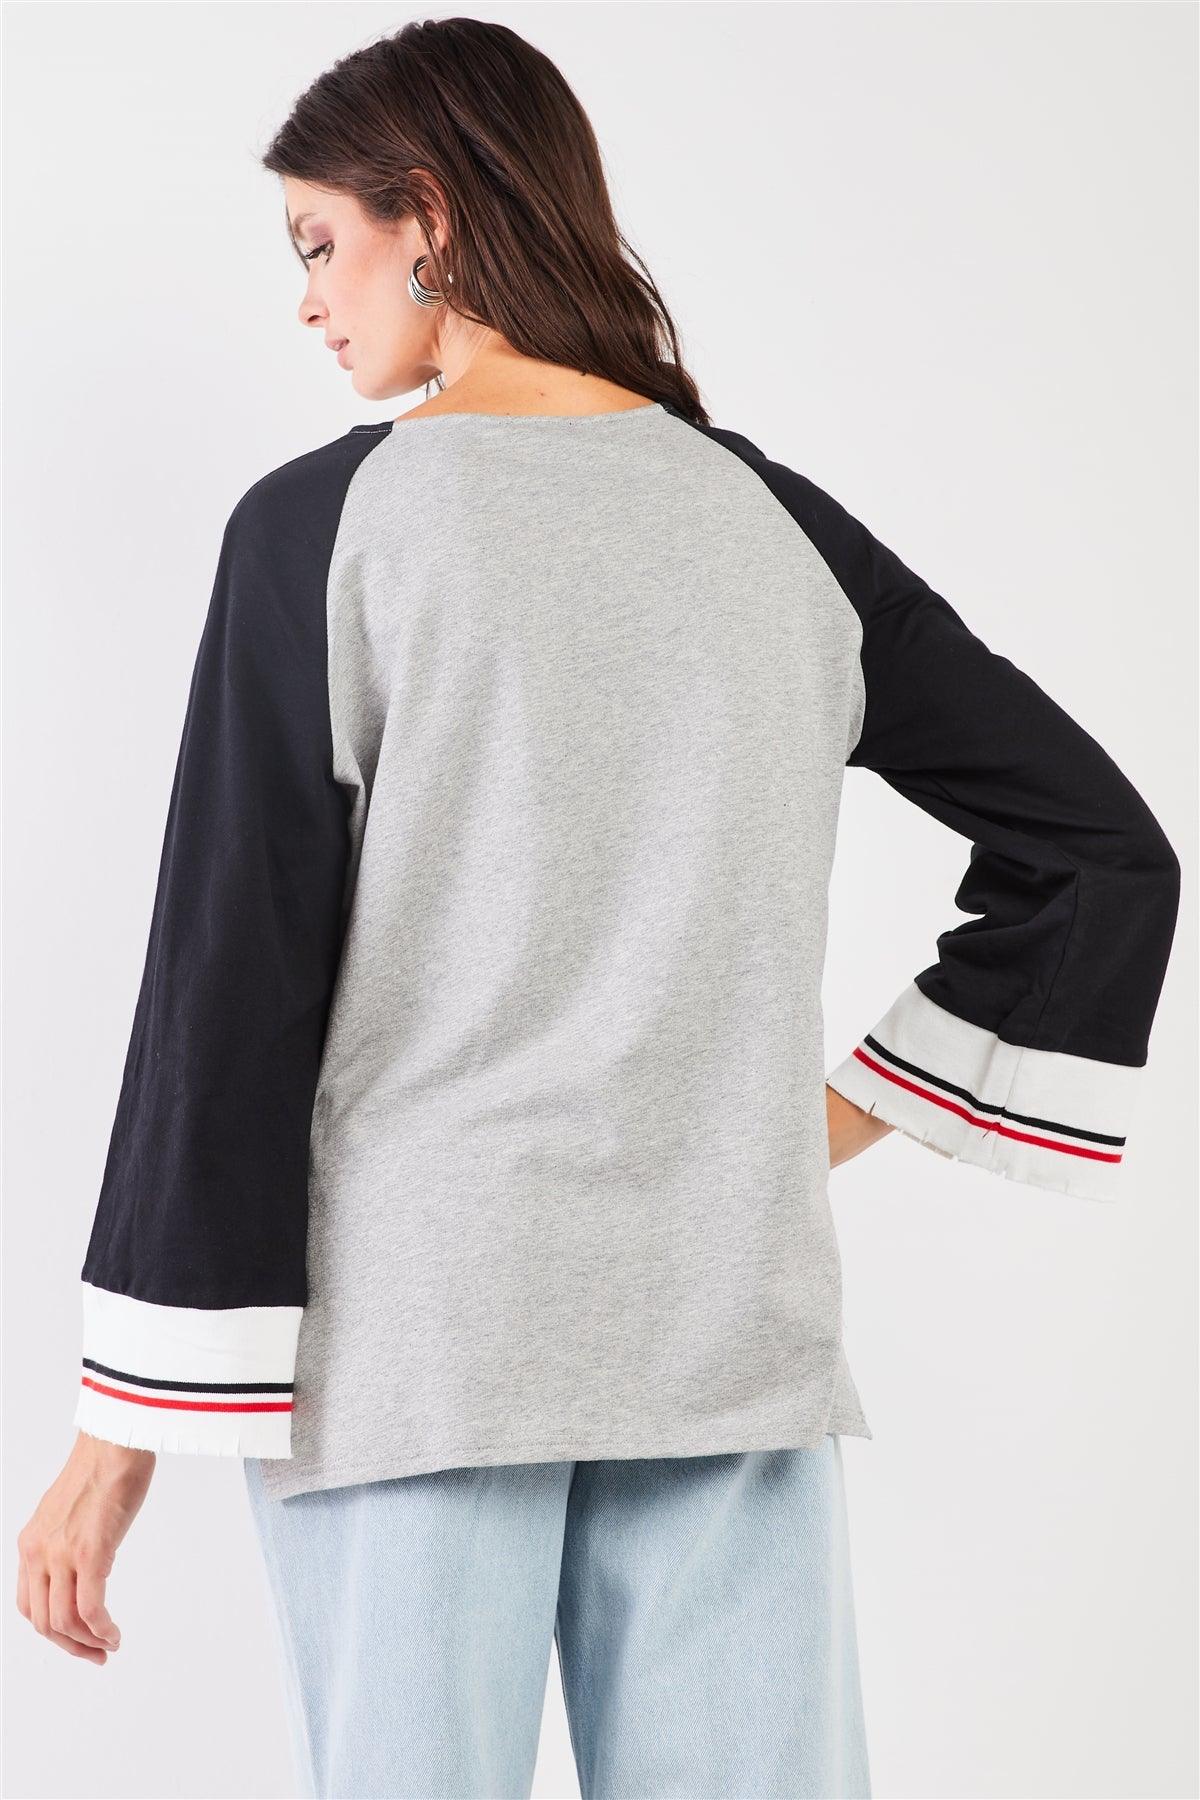 Heather Grey & Black Lace-Up V-Neck Long Bell Sleeve Asymmetrical Sweatshirt /2-2-2